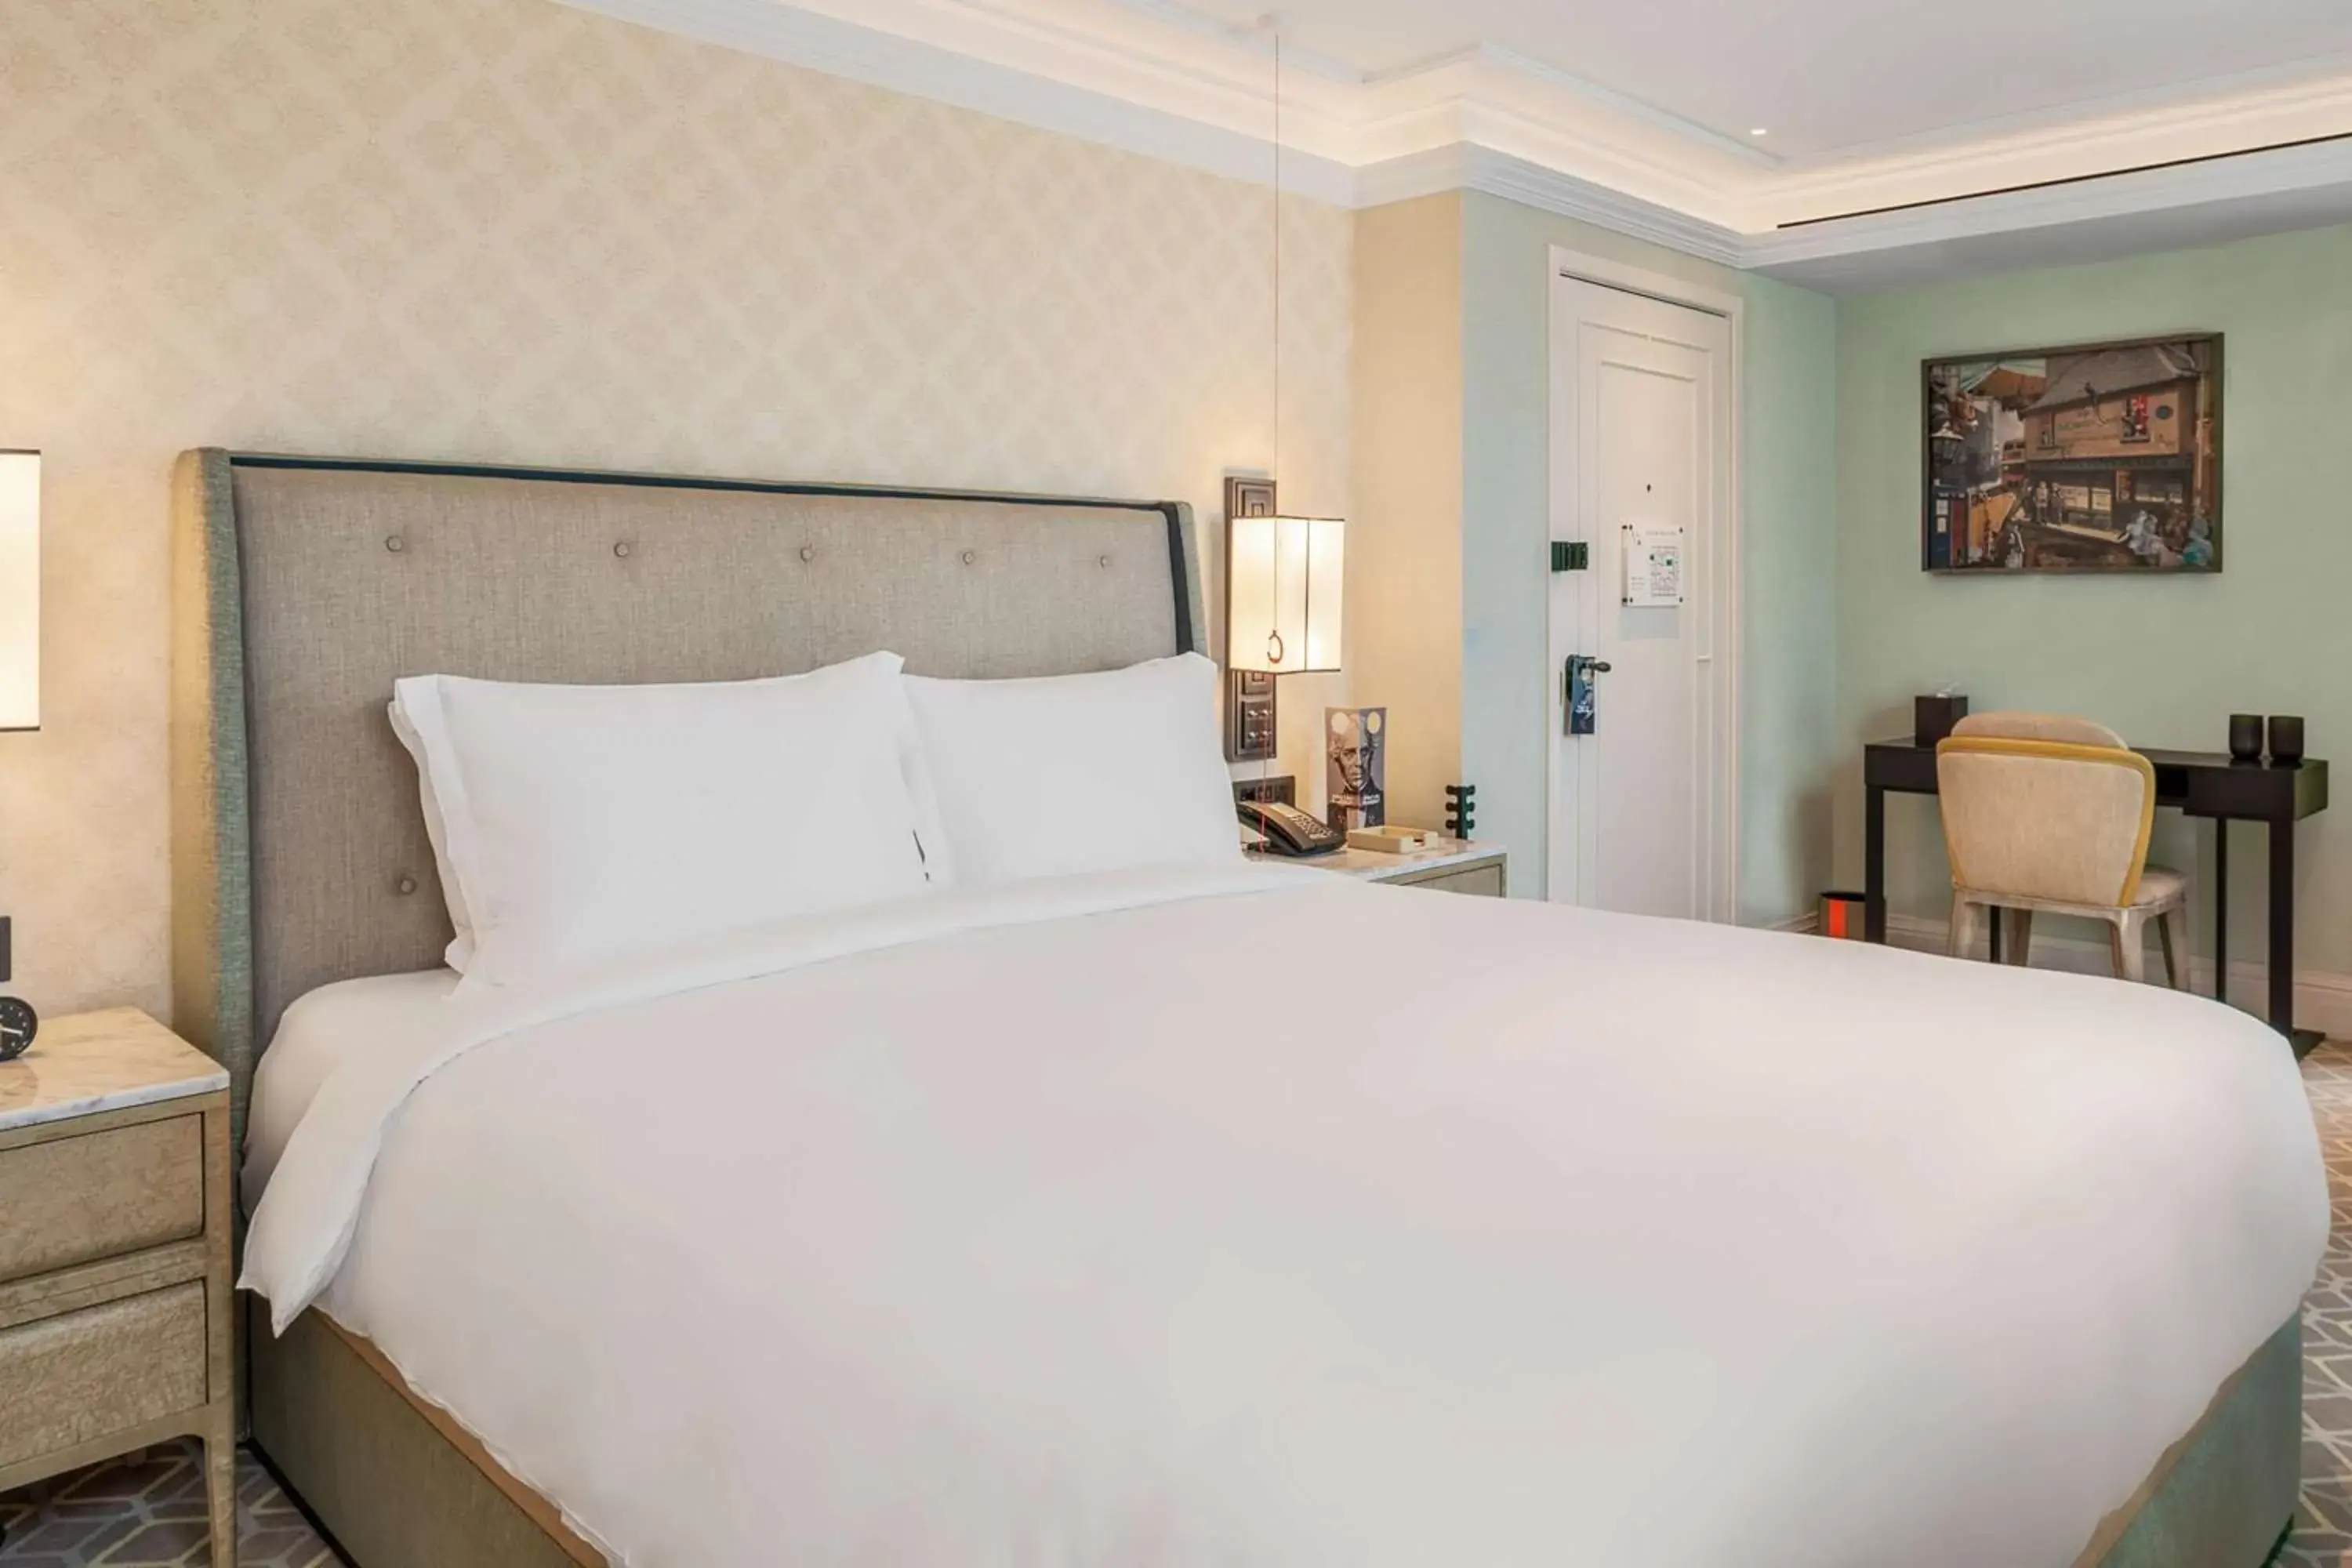 Bedroom, Bed in Great Scotland Yard Hotel, part of Hyatt